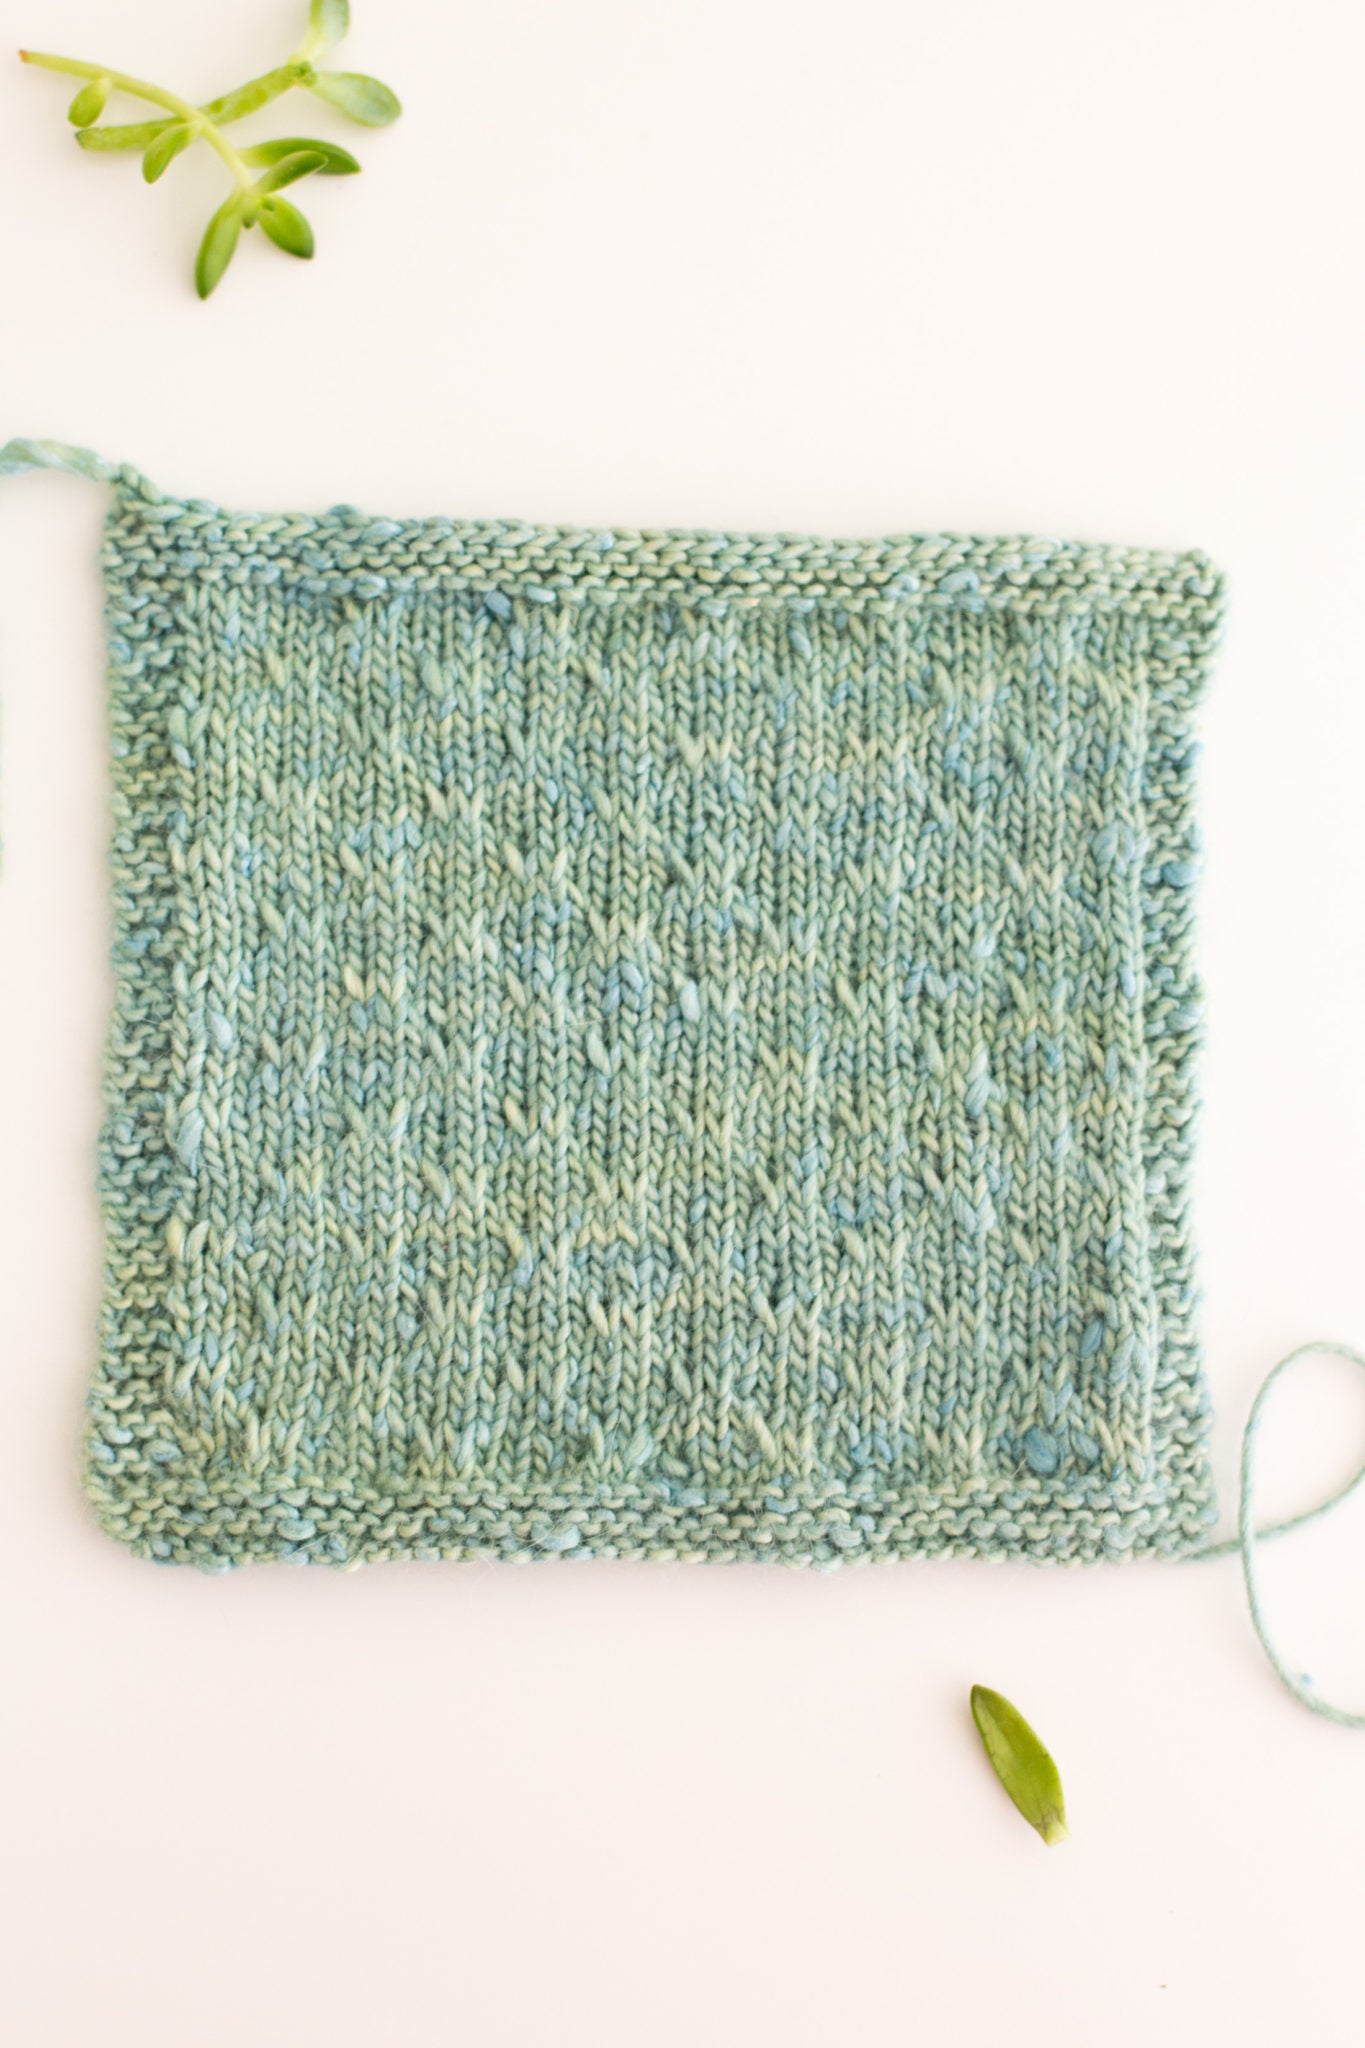 Slip Stitch Knitting Pattern How To: Trellis Double Slip Stitch